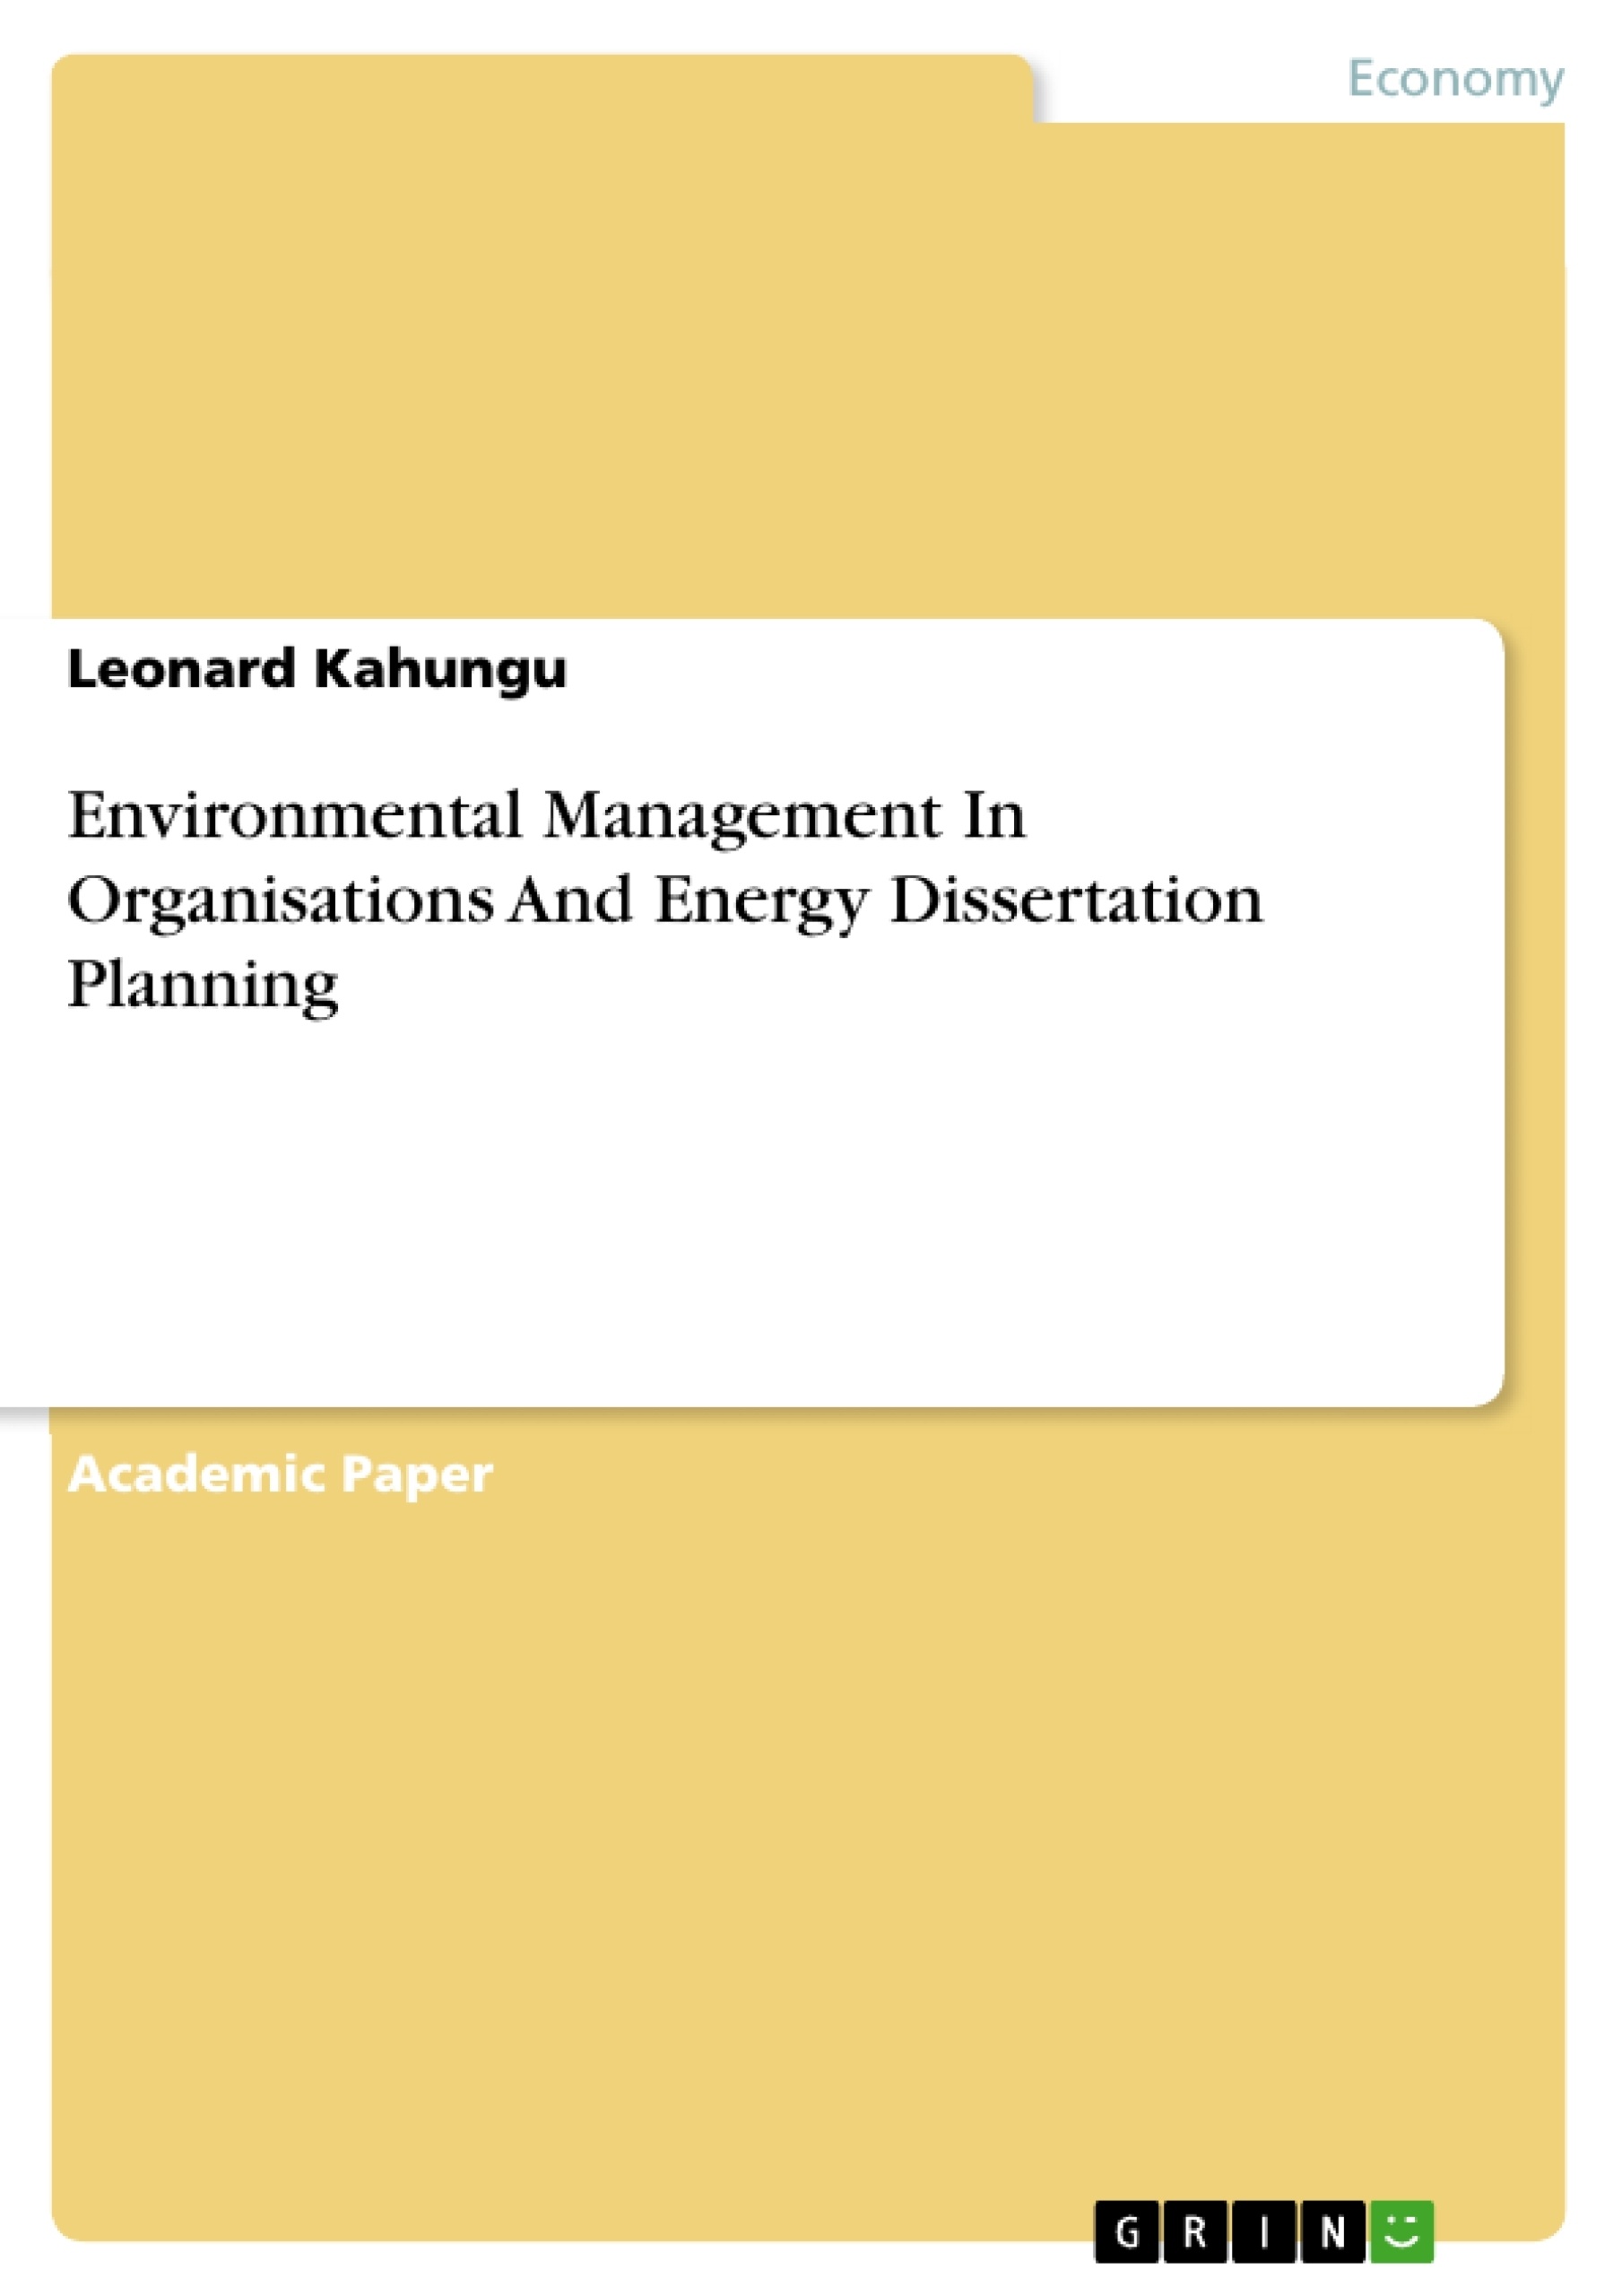 dissertation on environmental management